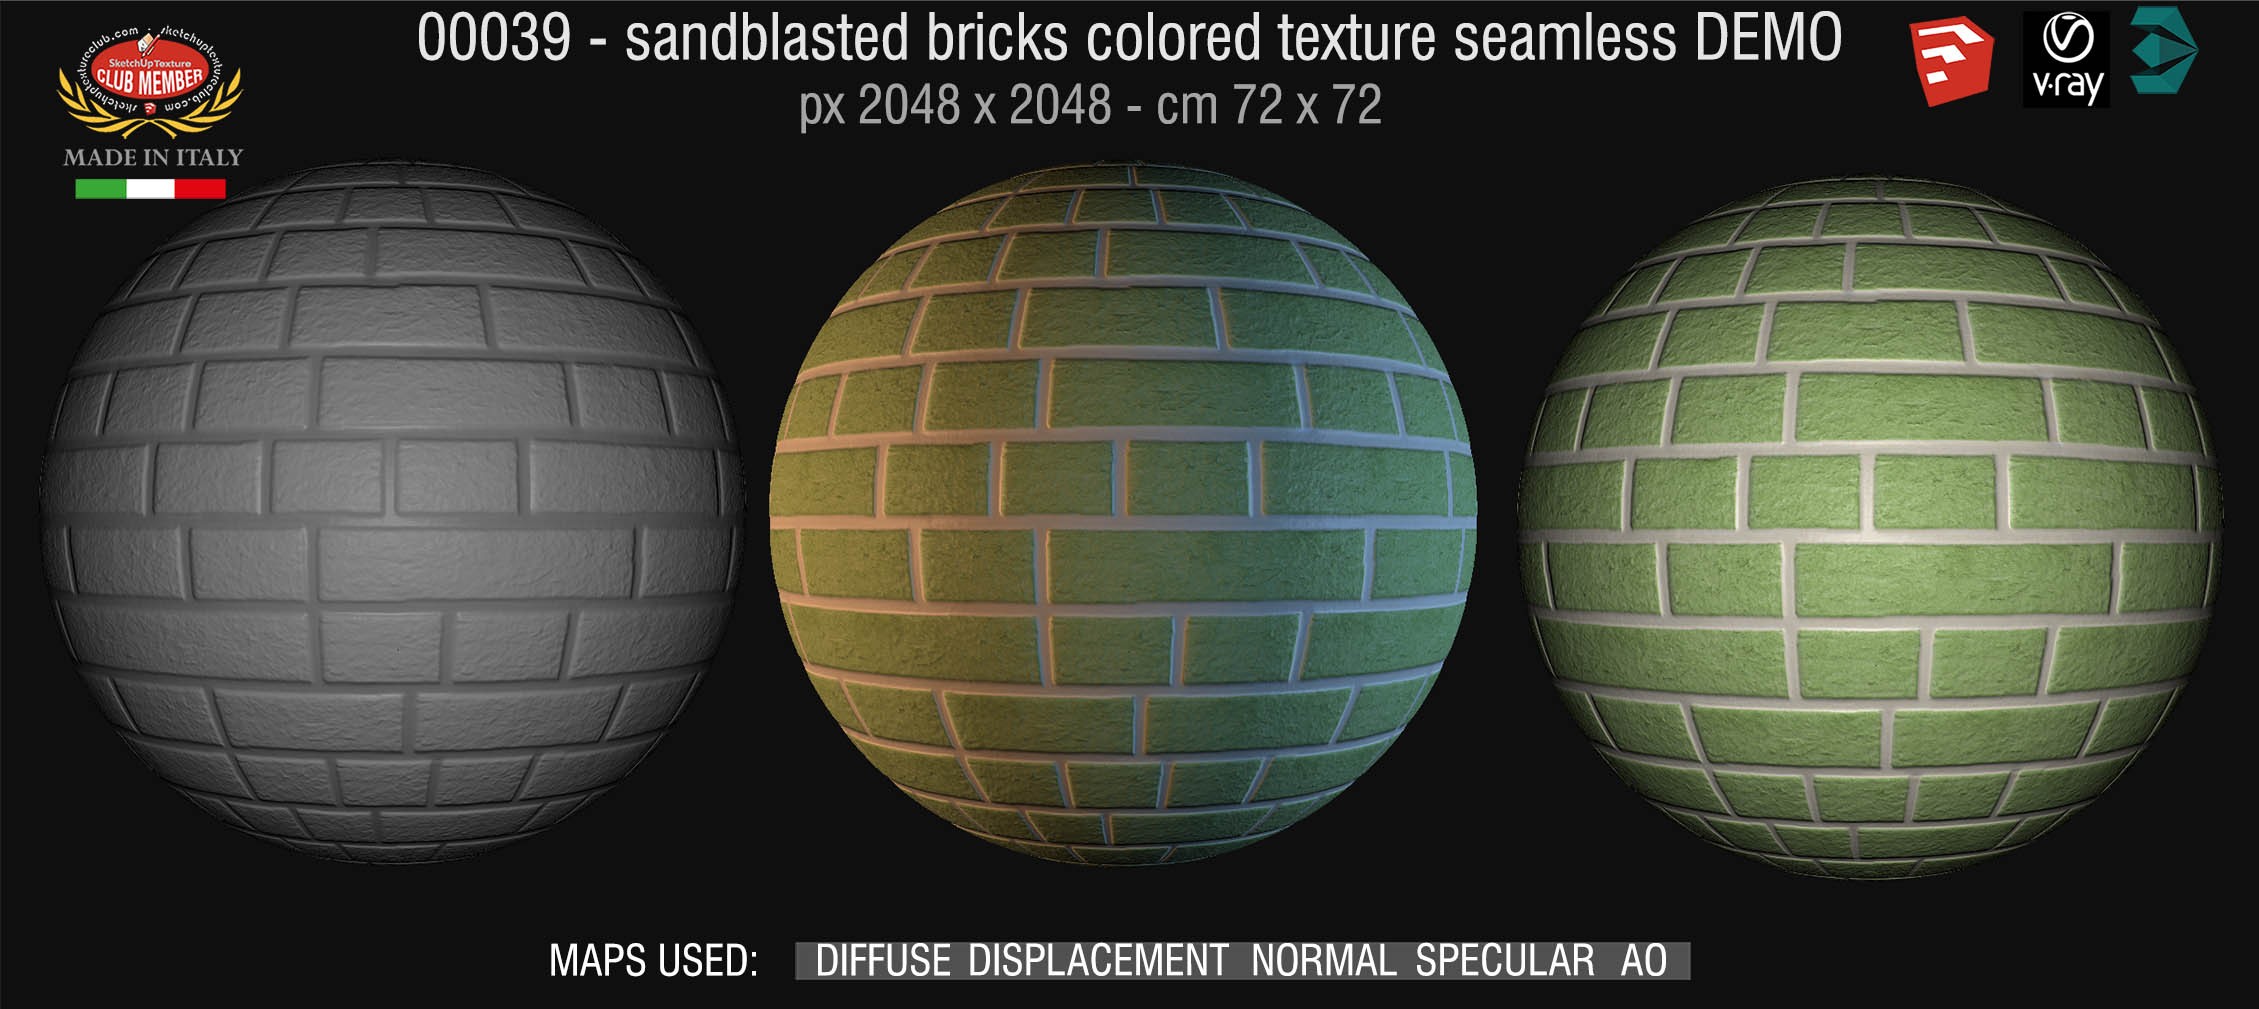 000339 Sandblasted bricks colored texture seamless + maps DEMO